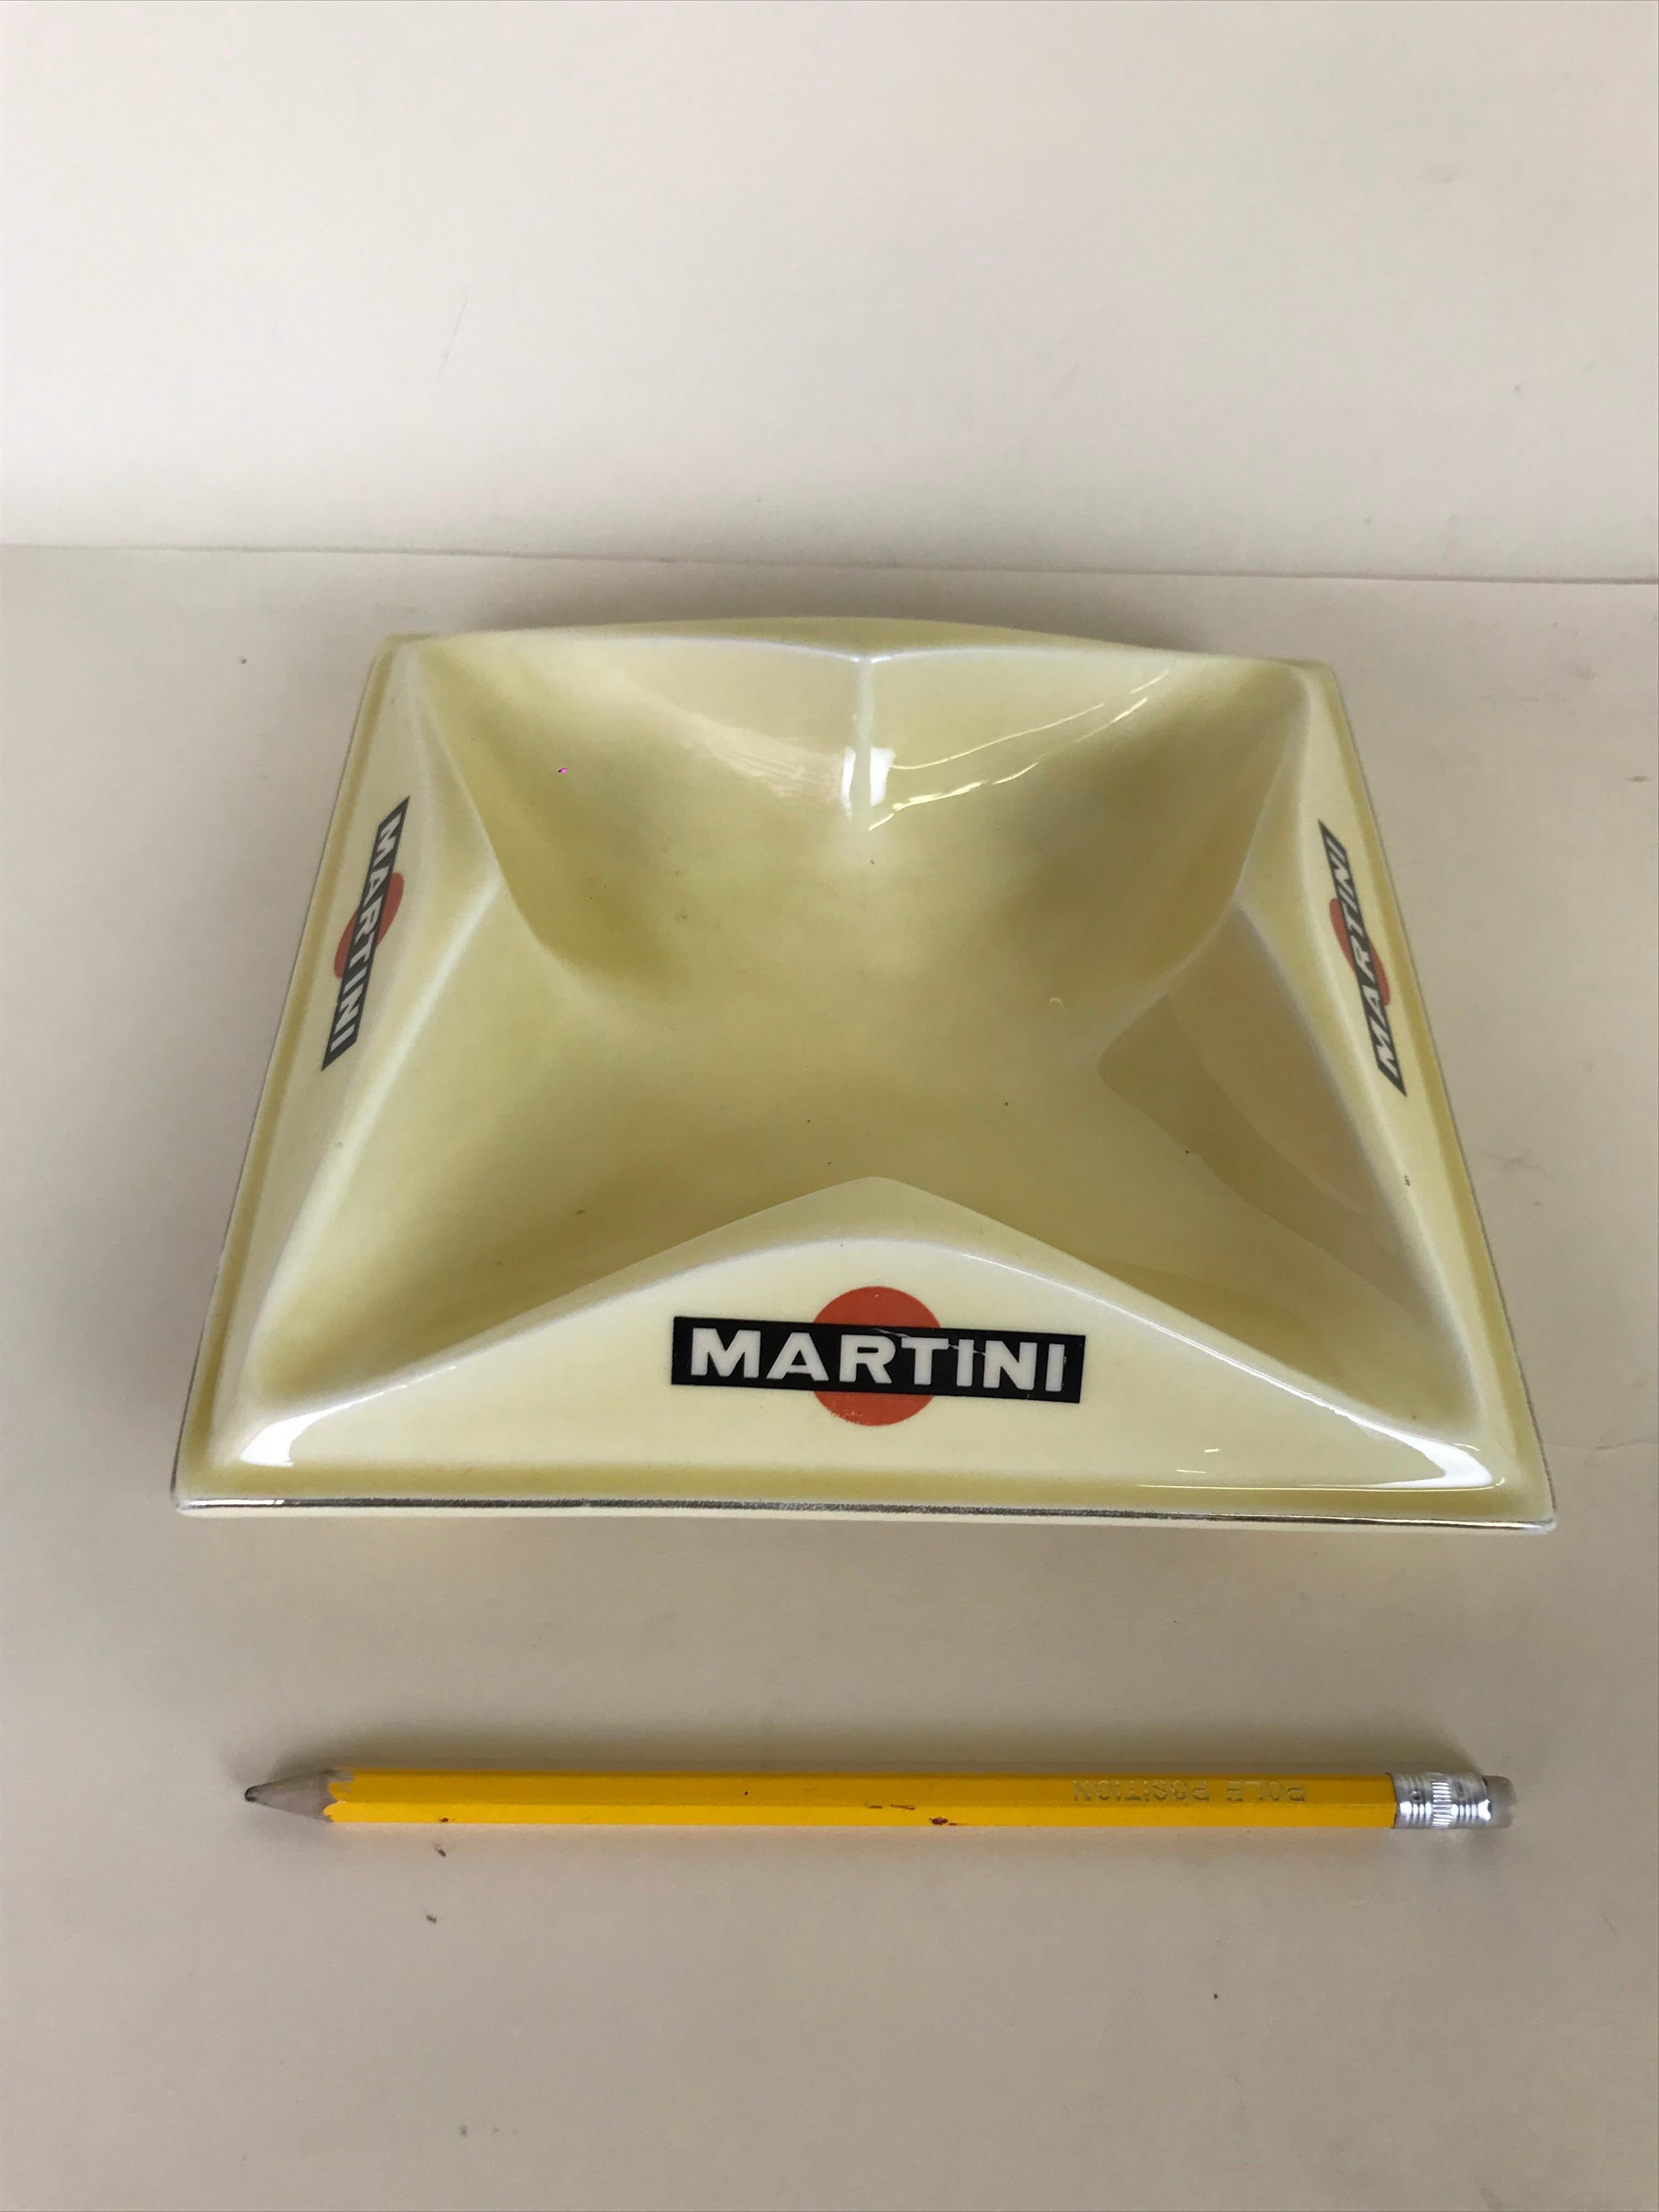 1970s Large French Advertising Martini Cream Ceramic Bistro Ashtray For Sale 3